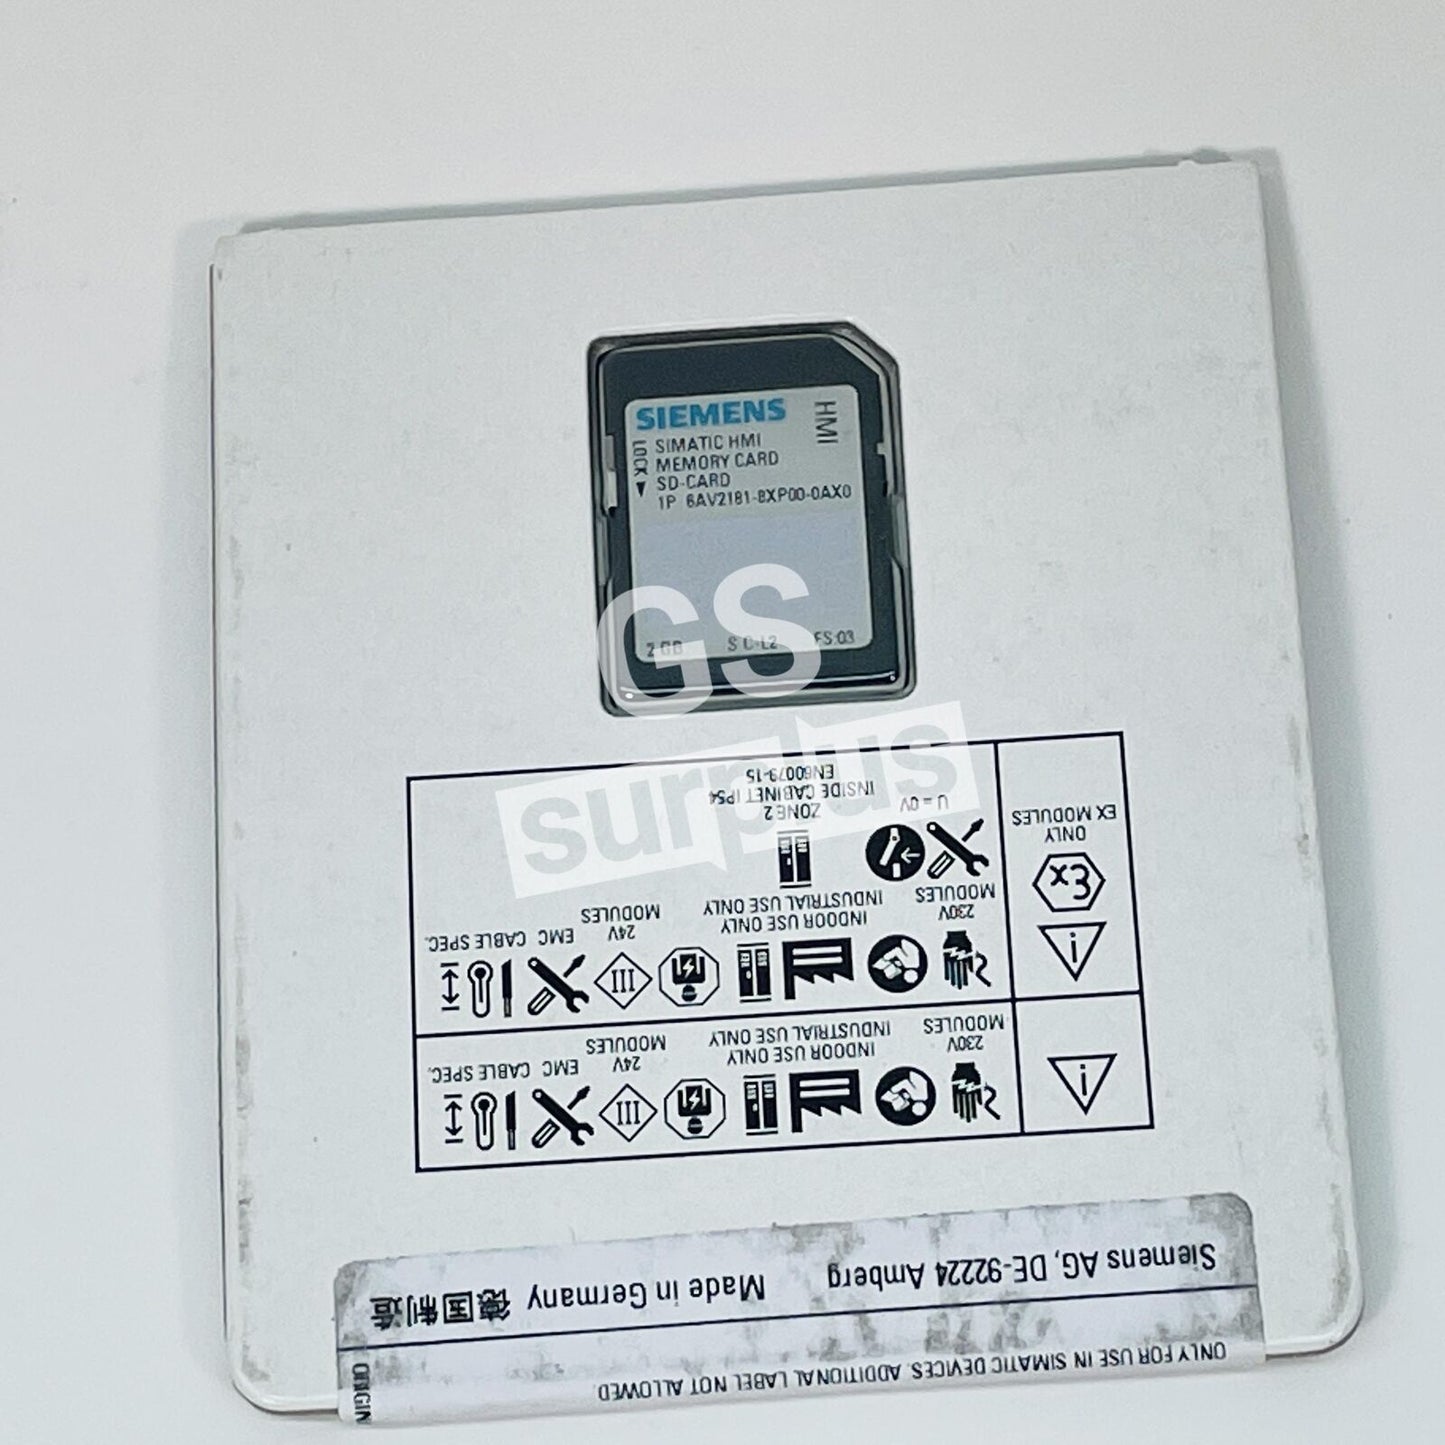 New SIEMENS 6AV2181-8XP00-0AX0 SIMATIC HMI MEMORY CARD 2 GB SD